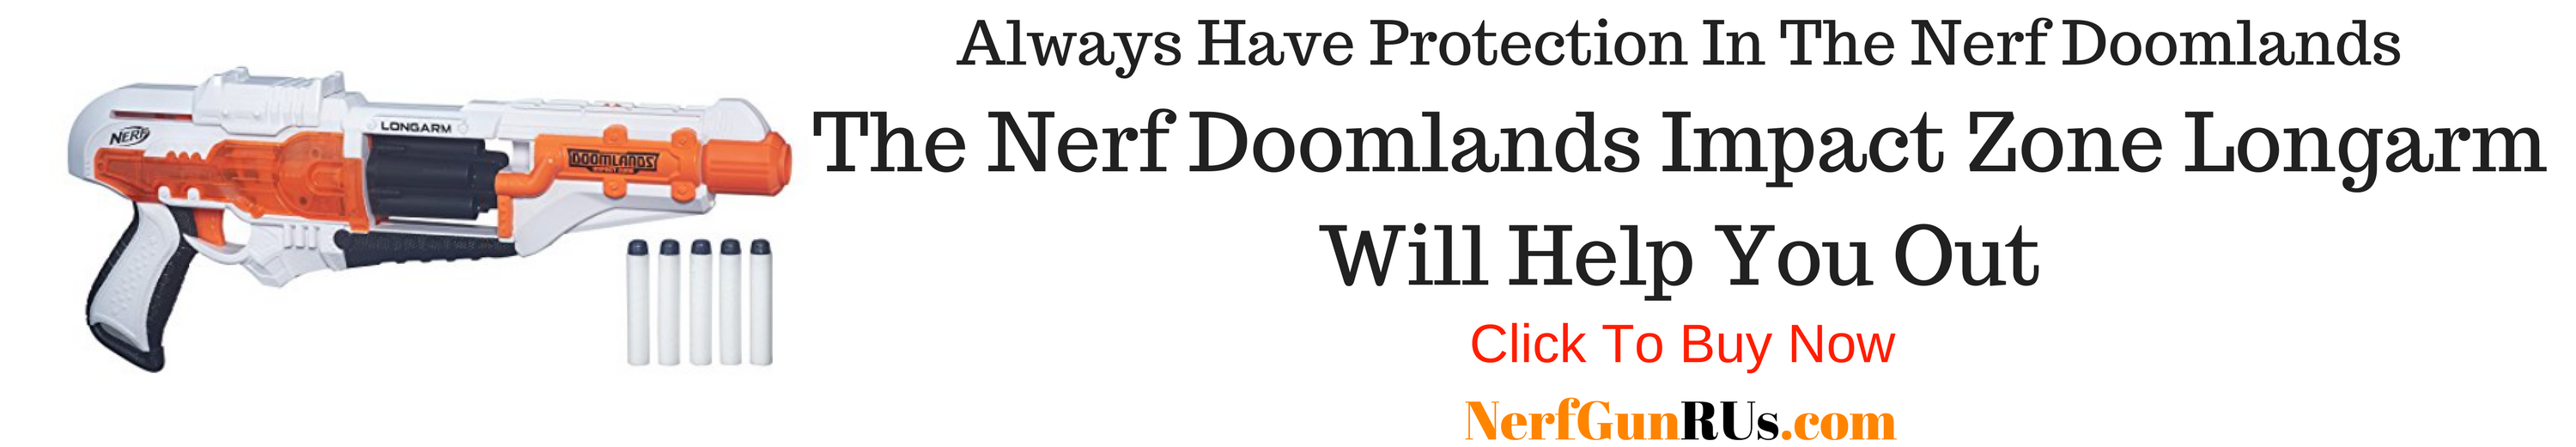 Always Have Protection In The Nerf Doomlands | NerfGunRUs.com